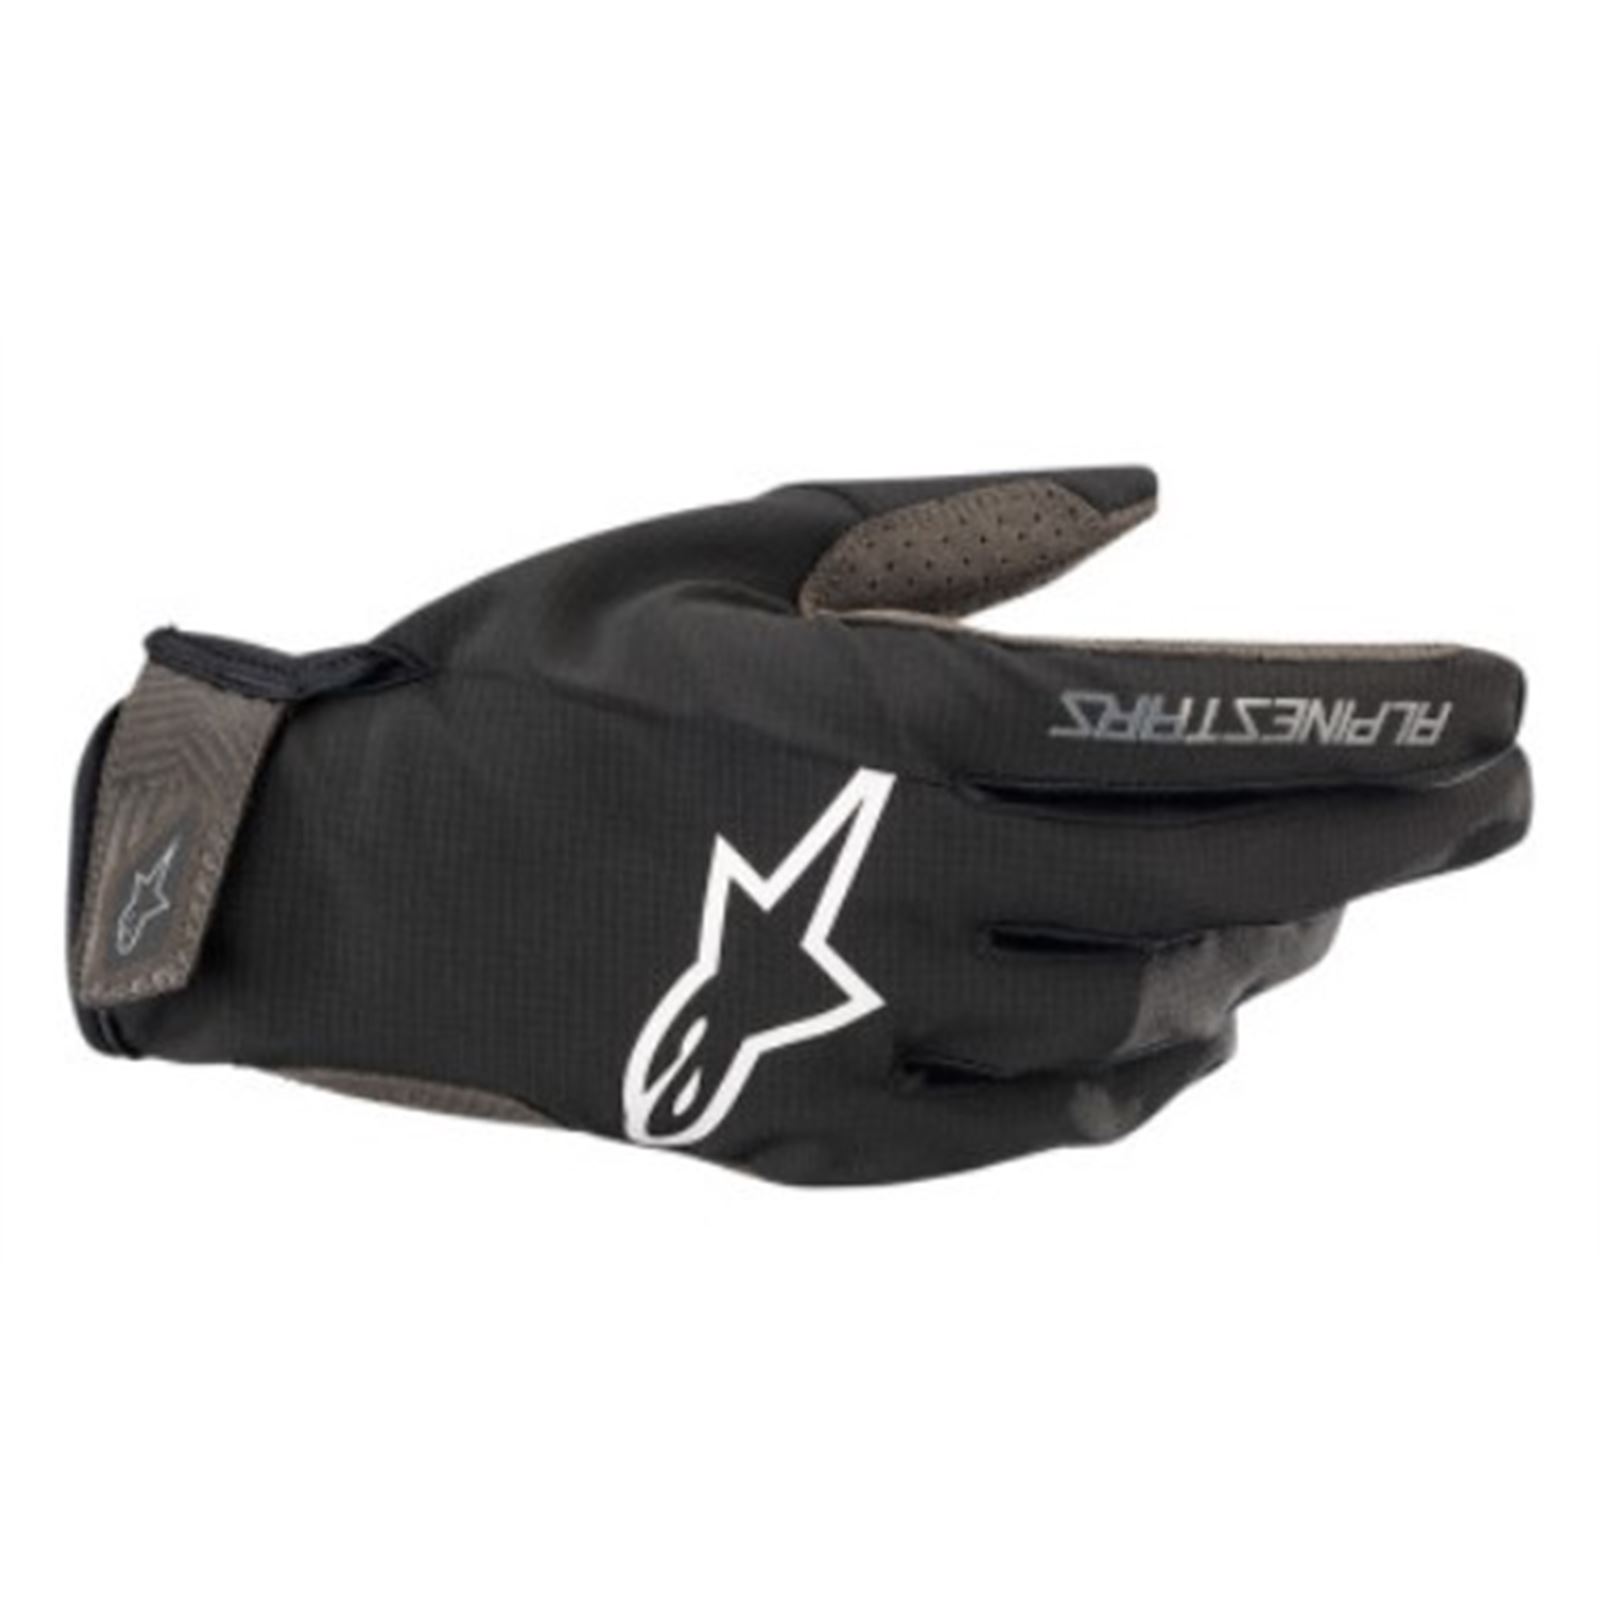 Alpinestars Drop 6.0 Gloves - Black - Small